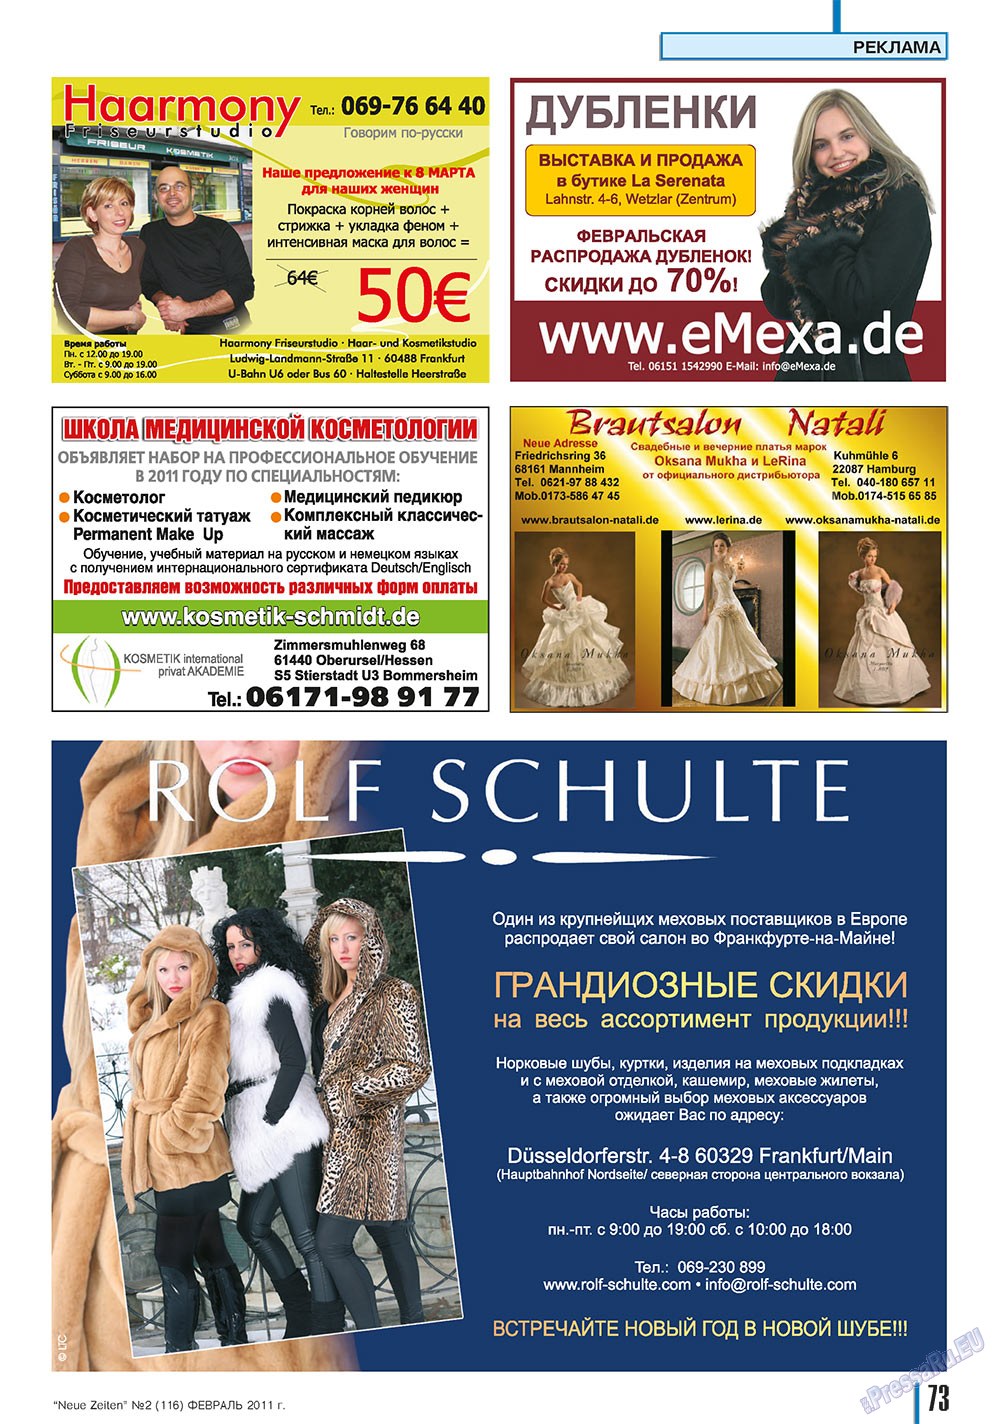 Neue Zeiten (журнал). 2011 год, номер 2, стр. 73